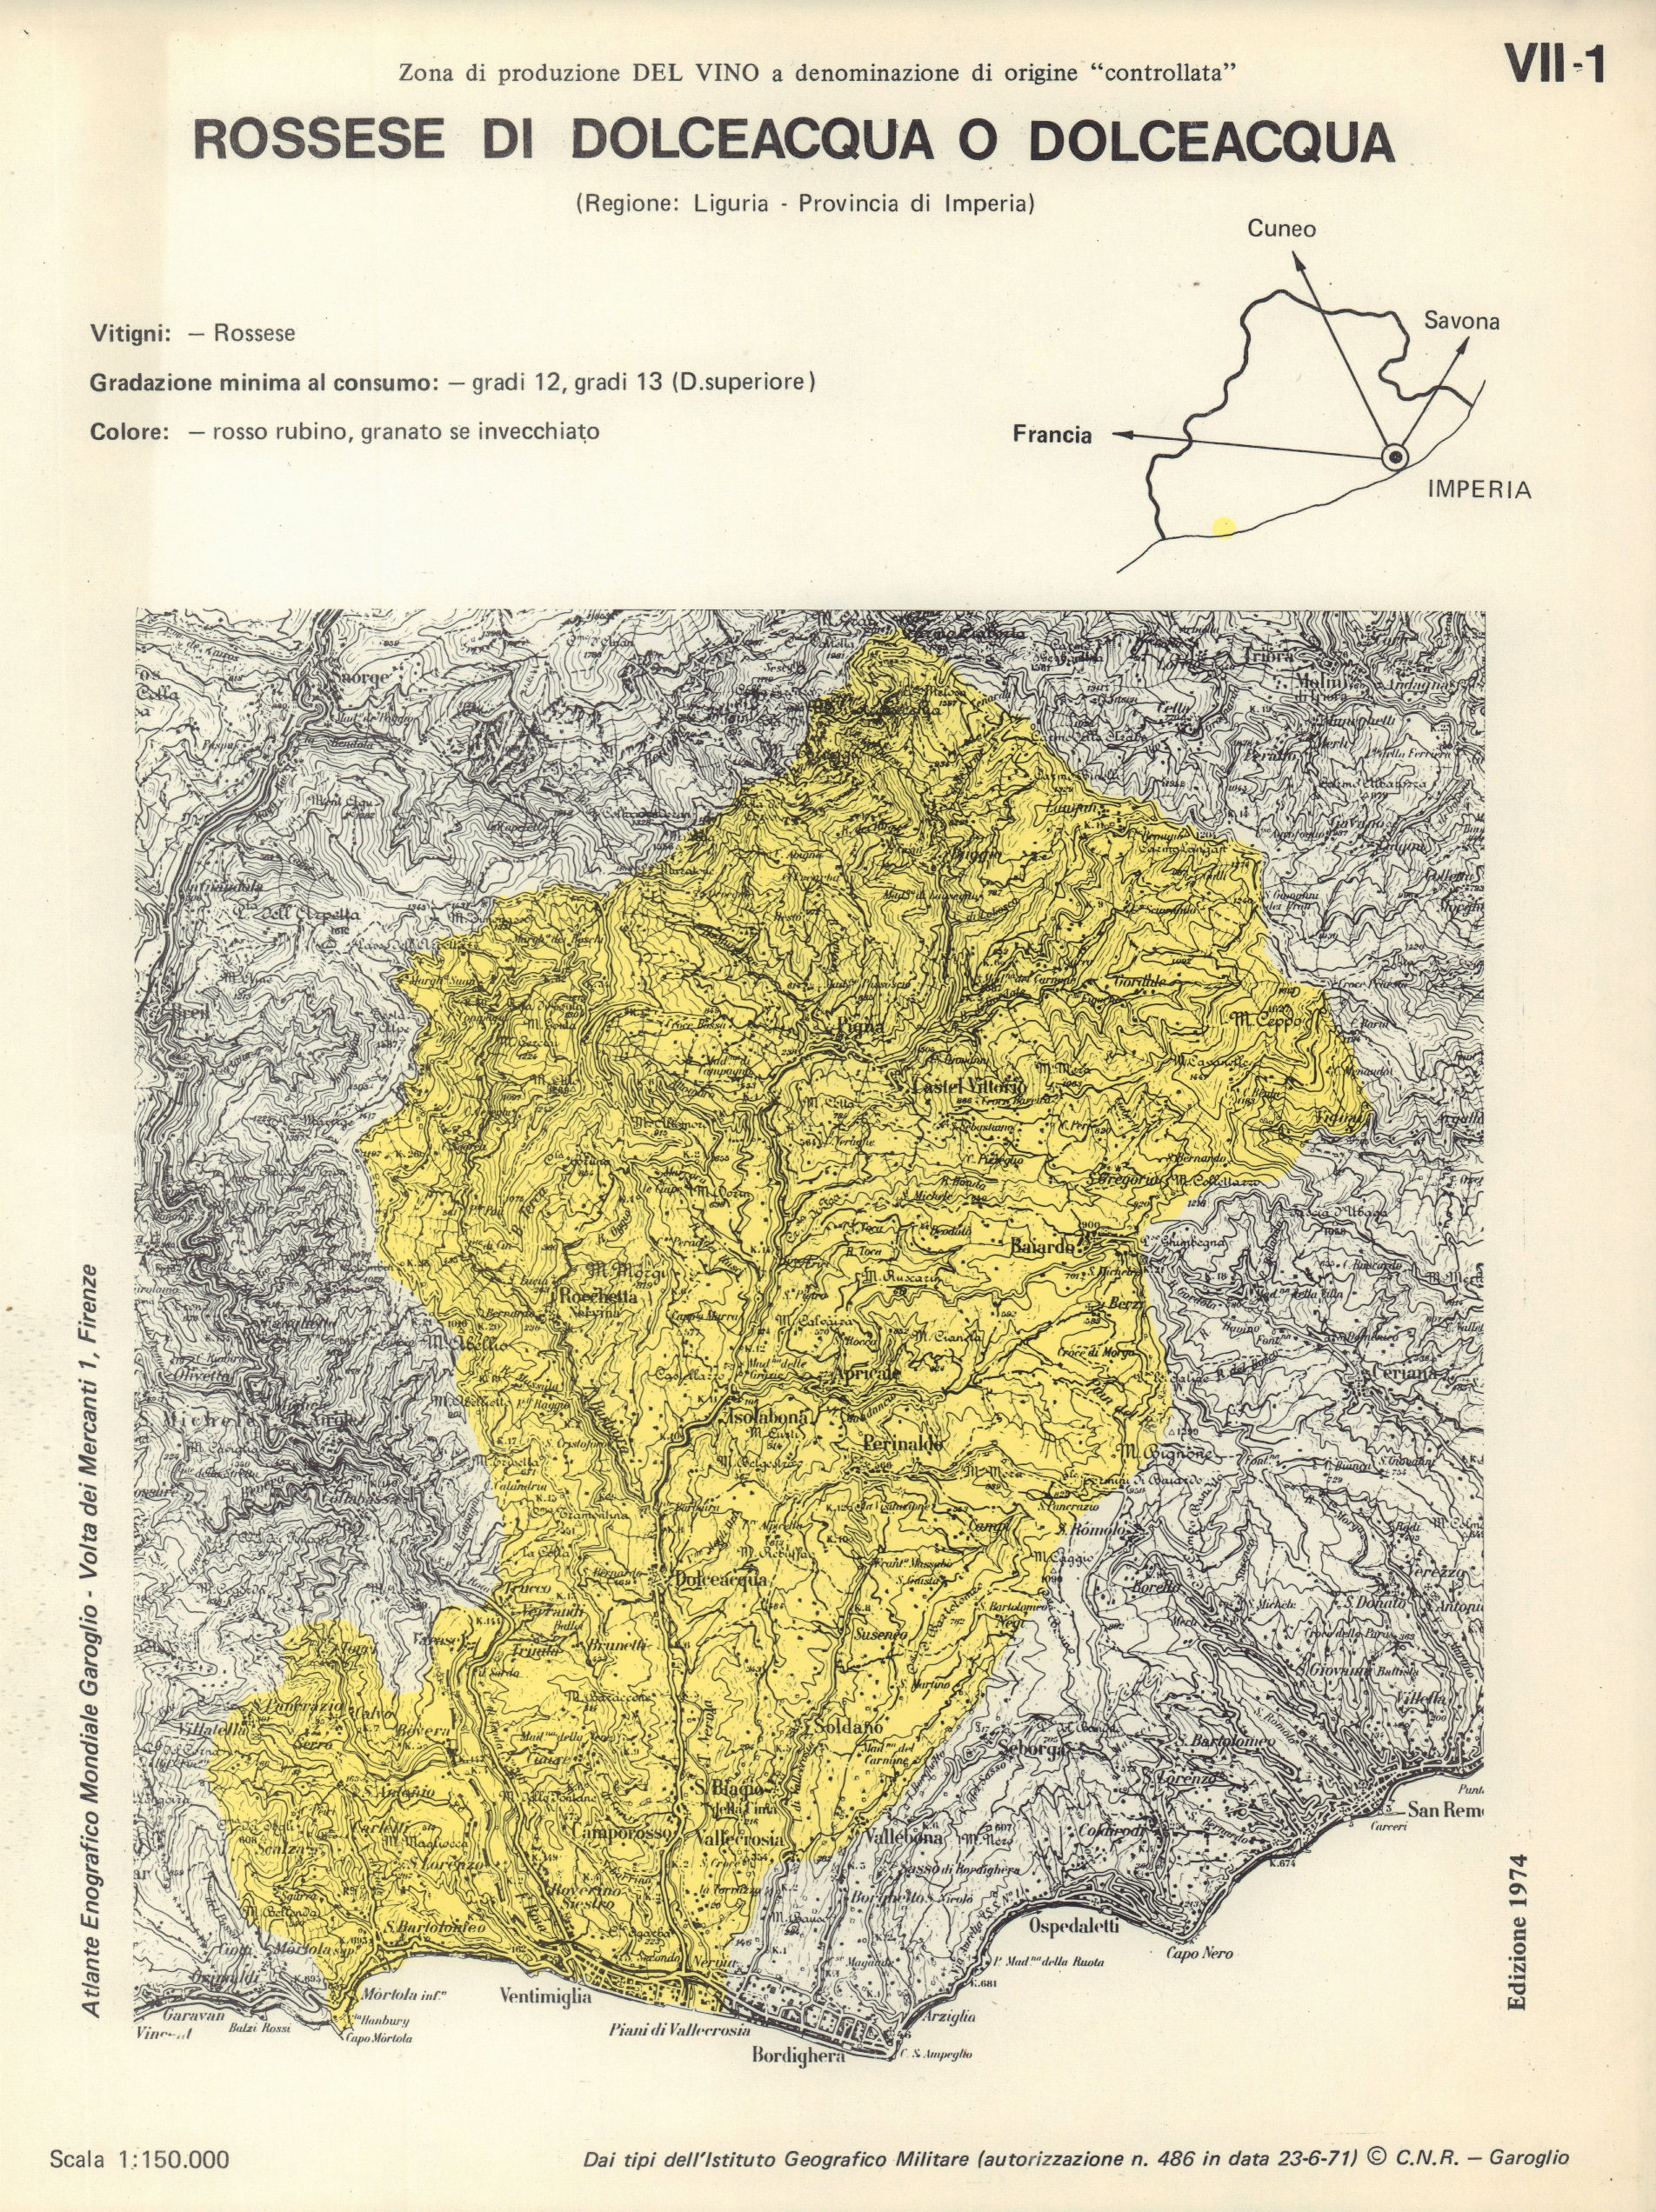 Italy wine. Rossese di Dolceacqua o Dolceacqua DOC. Liguria. Imperia 1976 map